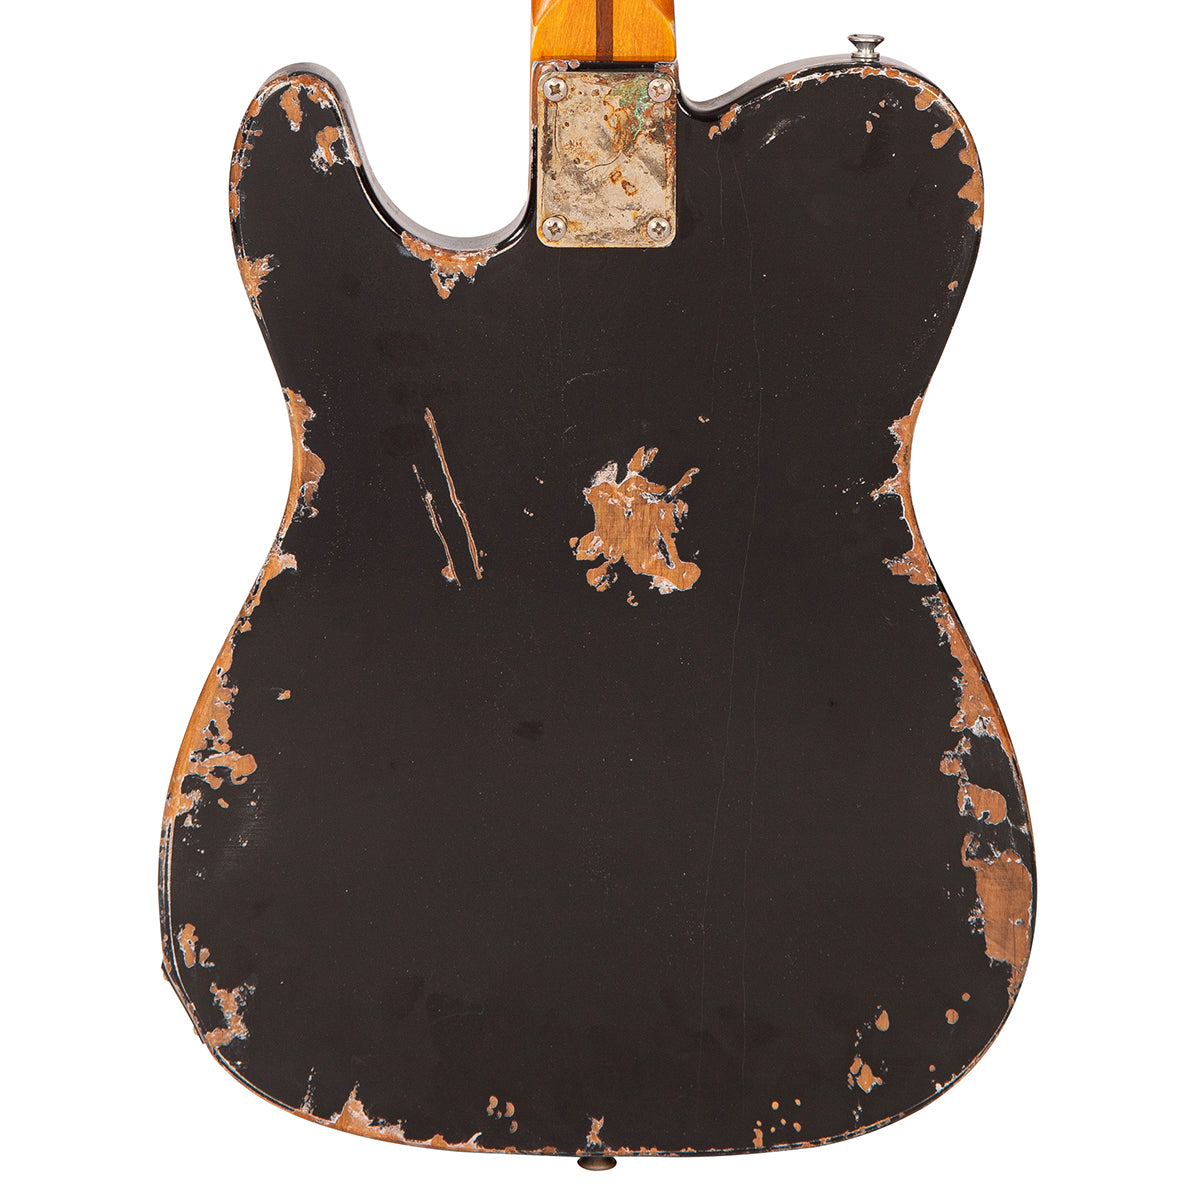 Vintage V52 ProShop Unique - Black Icon with Bigsby, Electrics for sale at Richards Guitars.